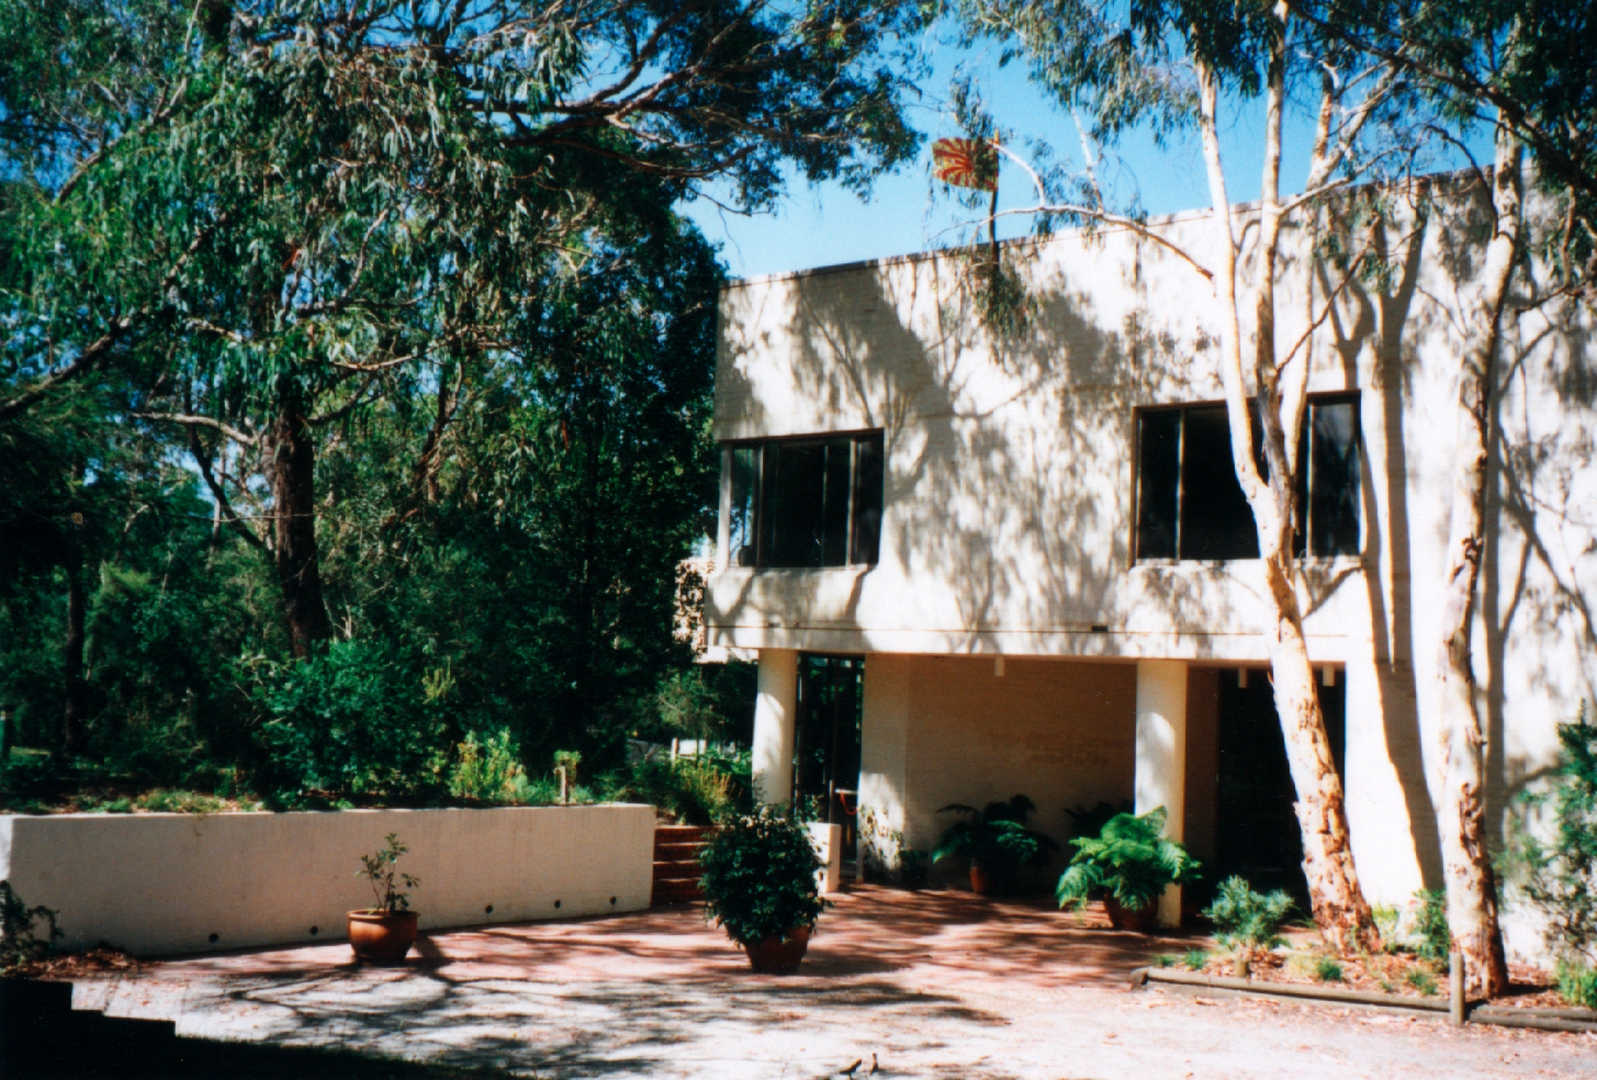 Brahma kumaris center at backster,australia - 22